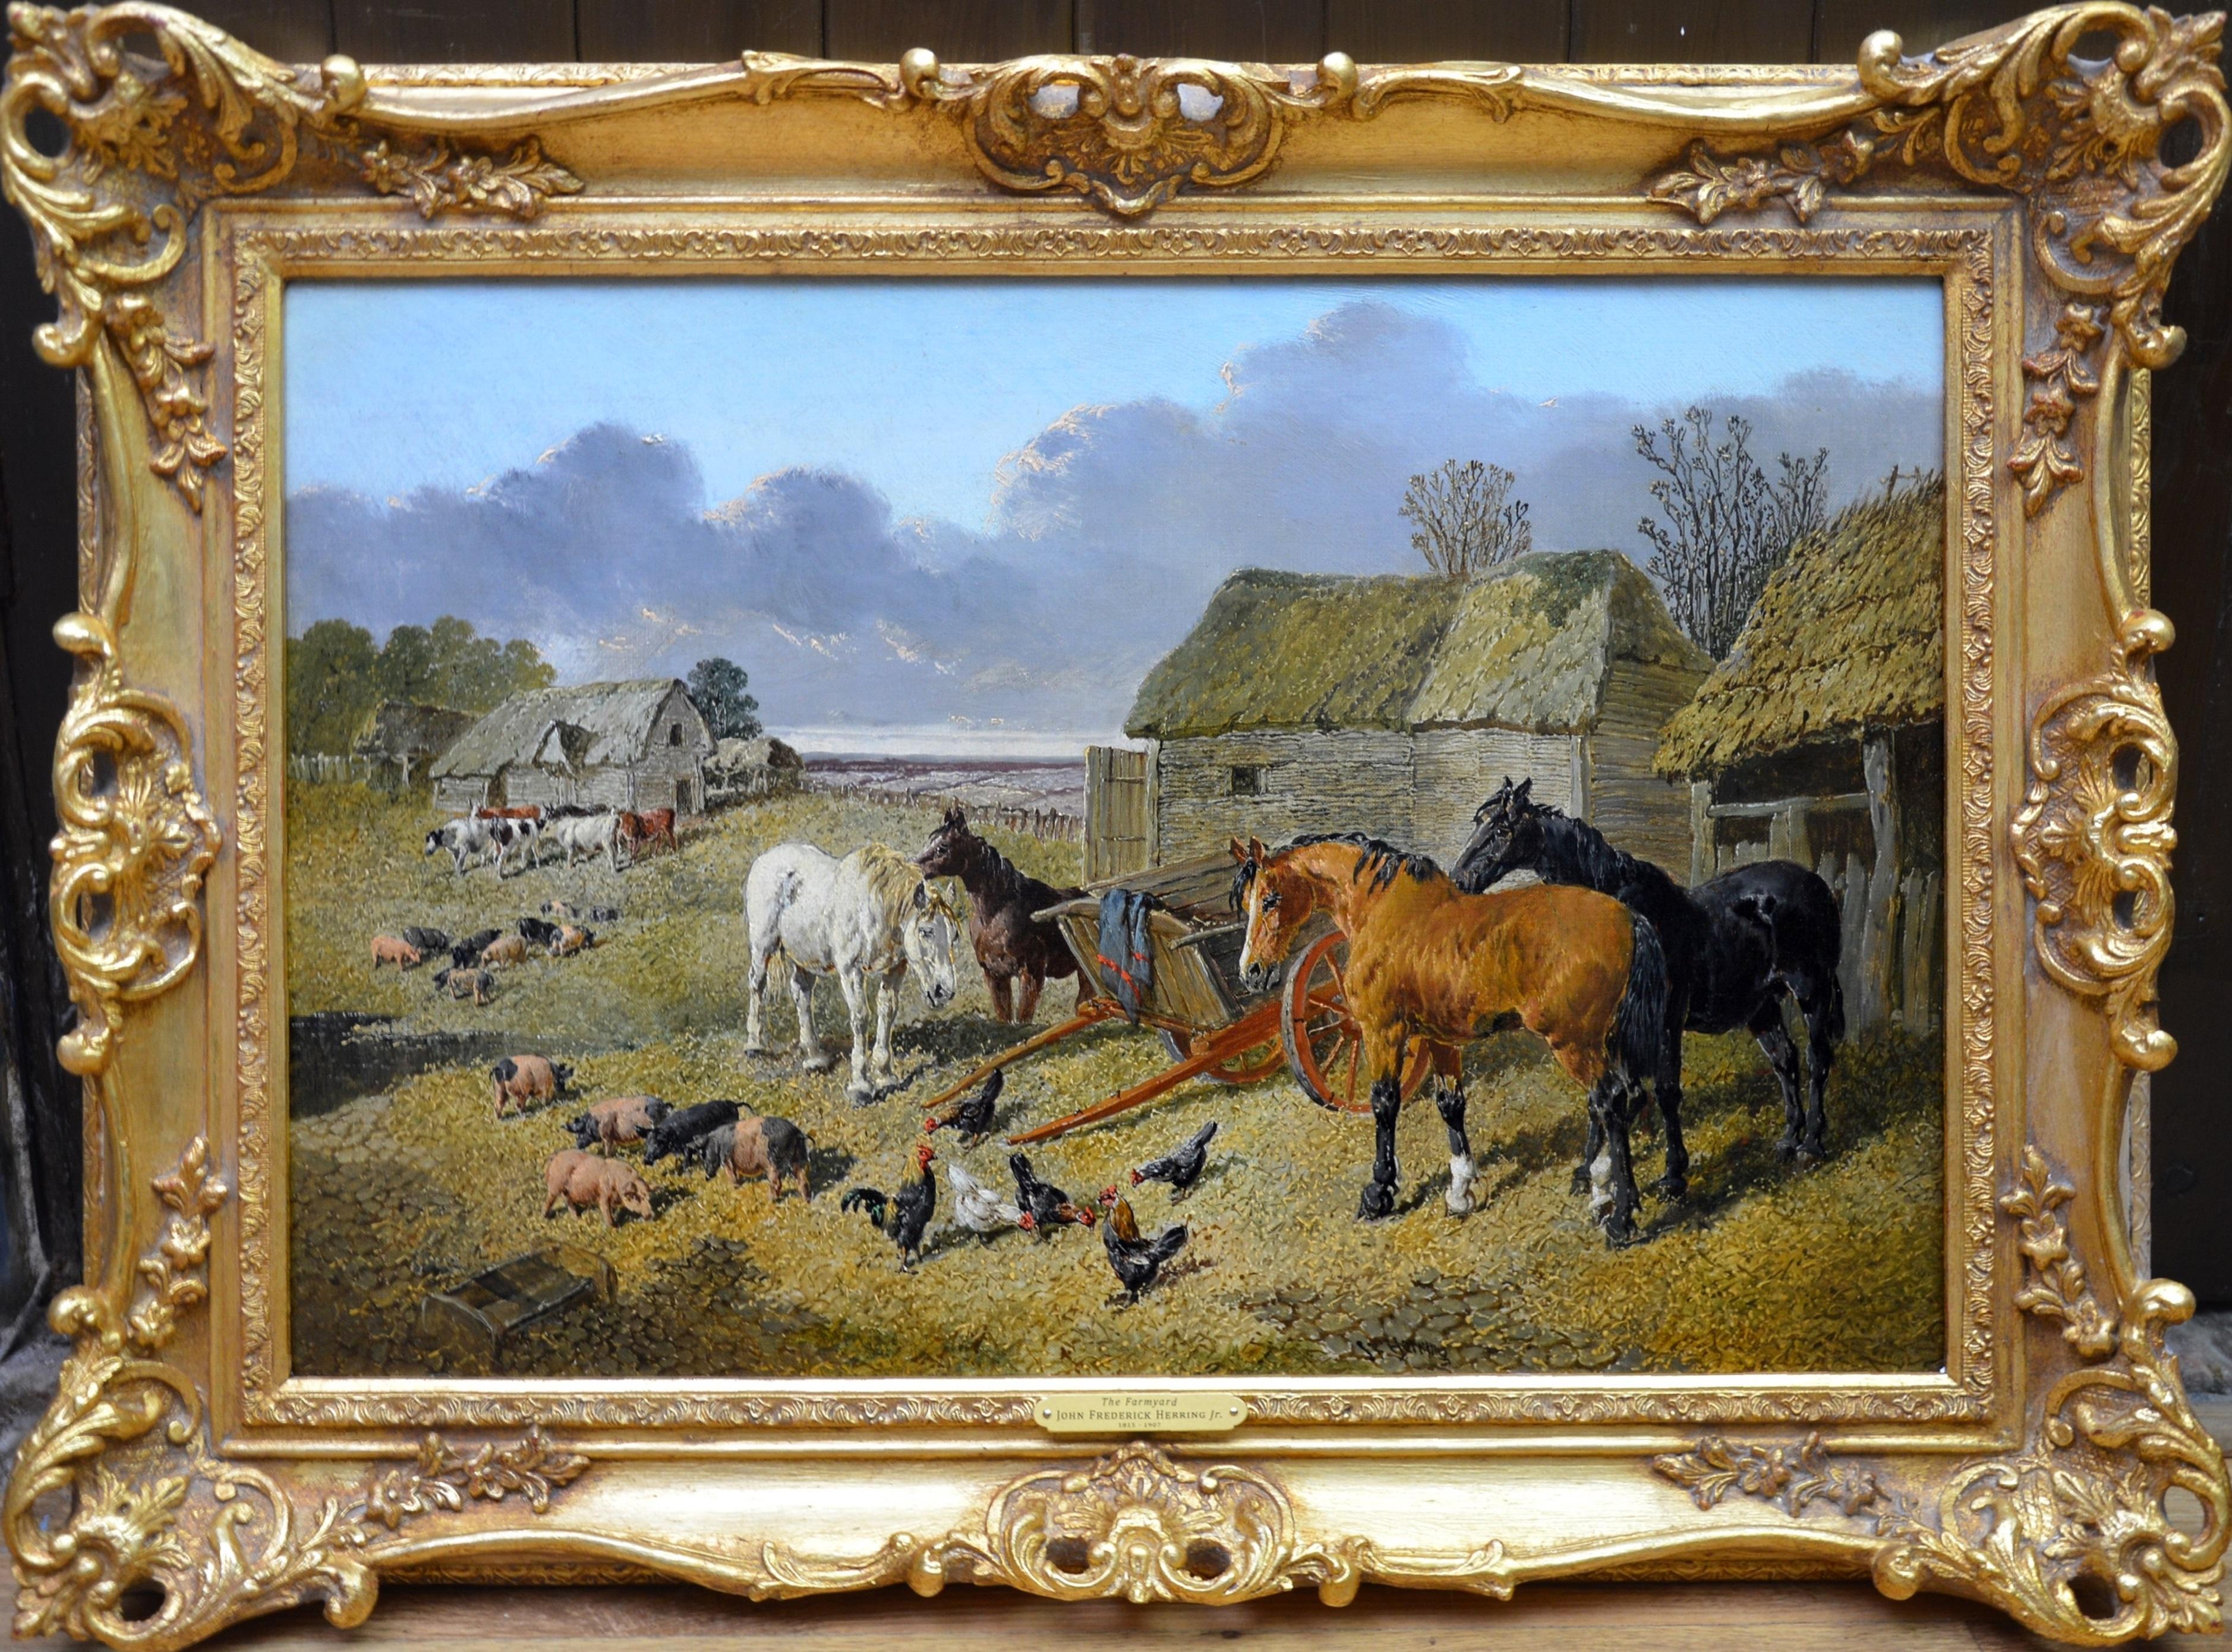 John Frederick Herring Jr. Landscape Painting - The Farmyard - 19th Century English Landscape Oil Painting